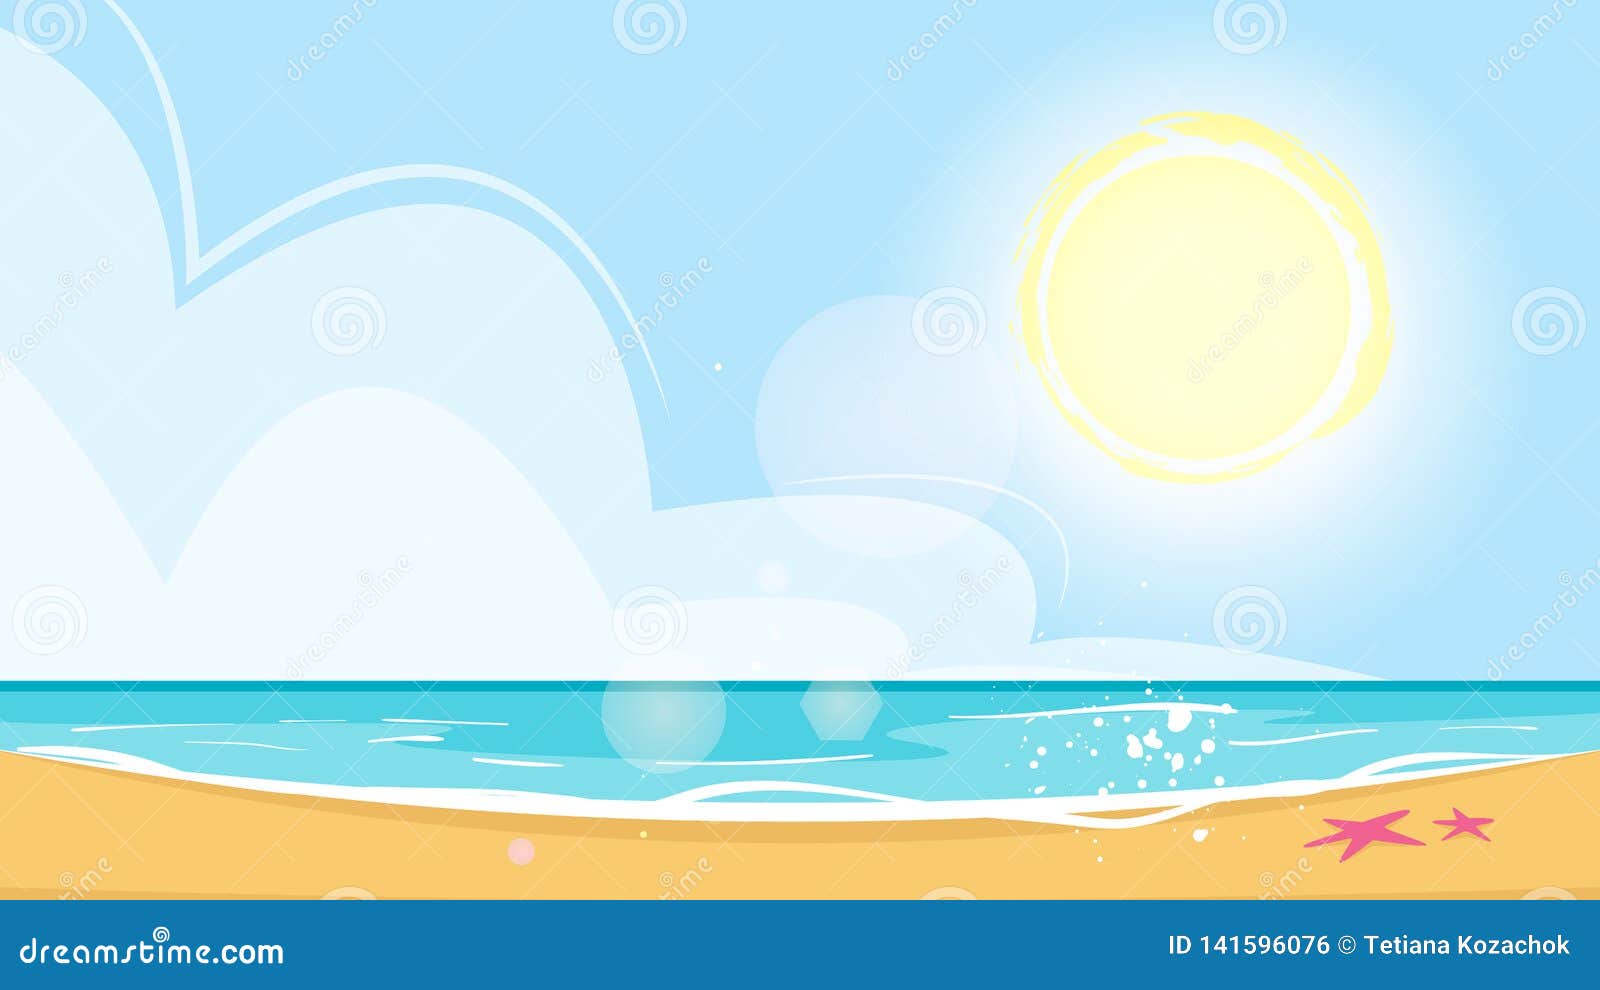 Summer season background stock vector. Illustration of sand - 141596076